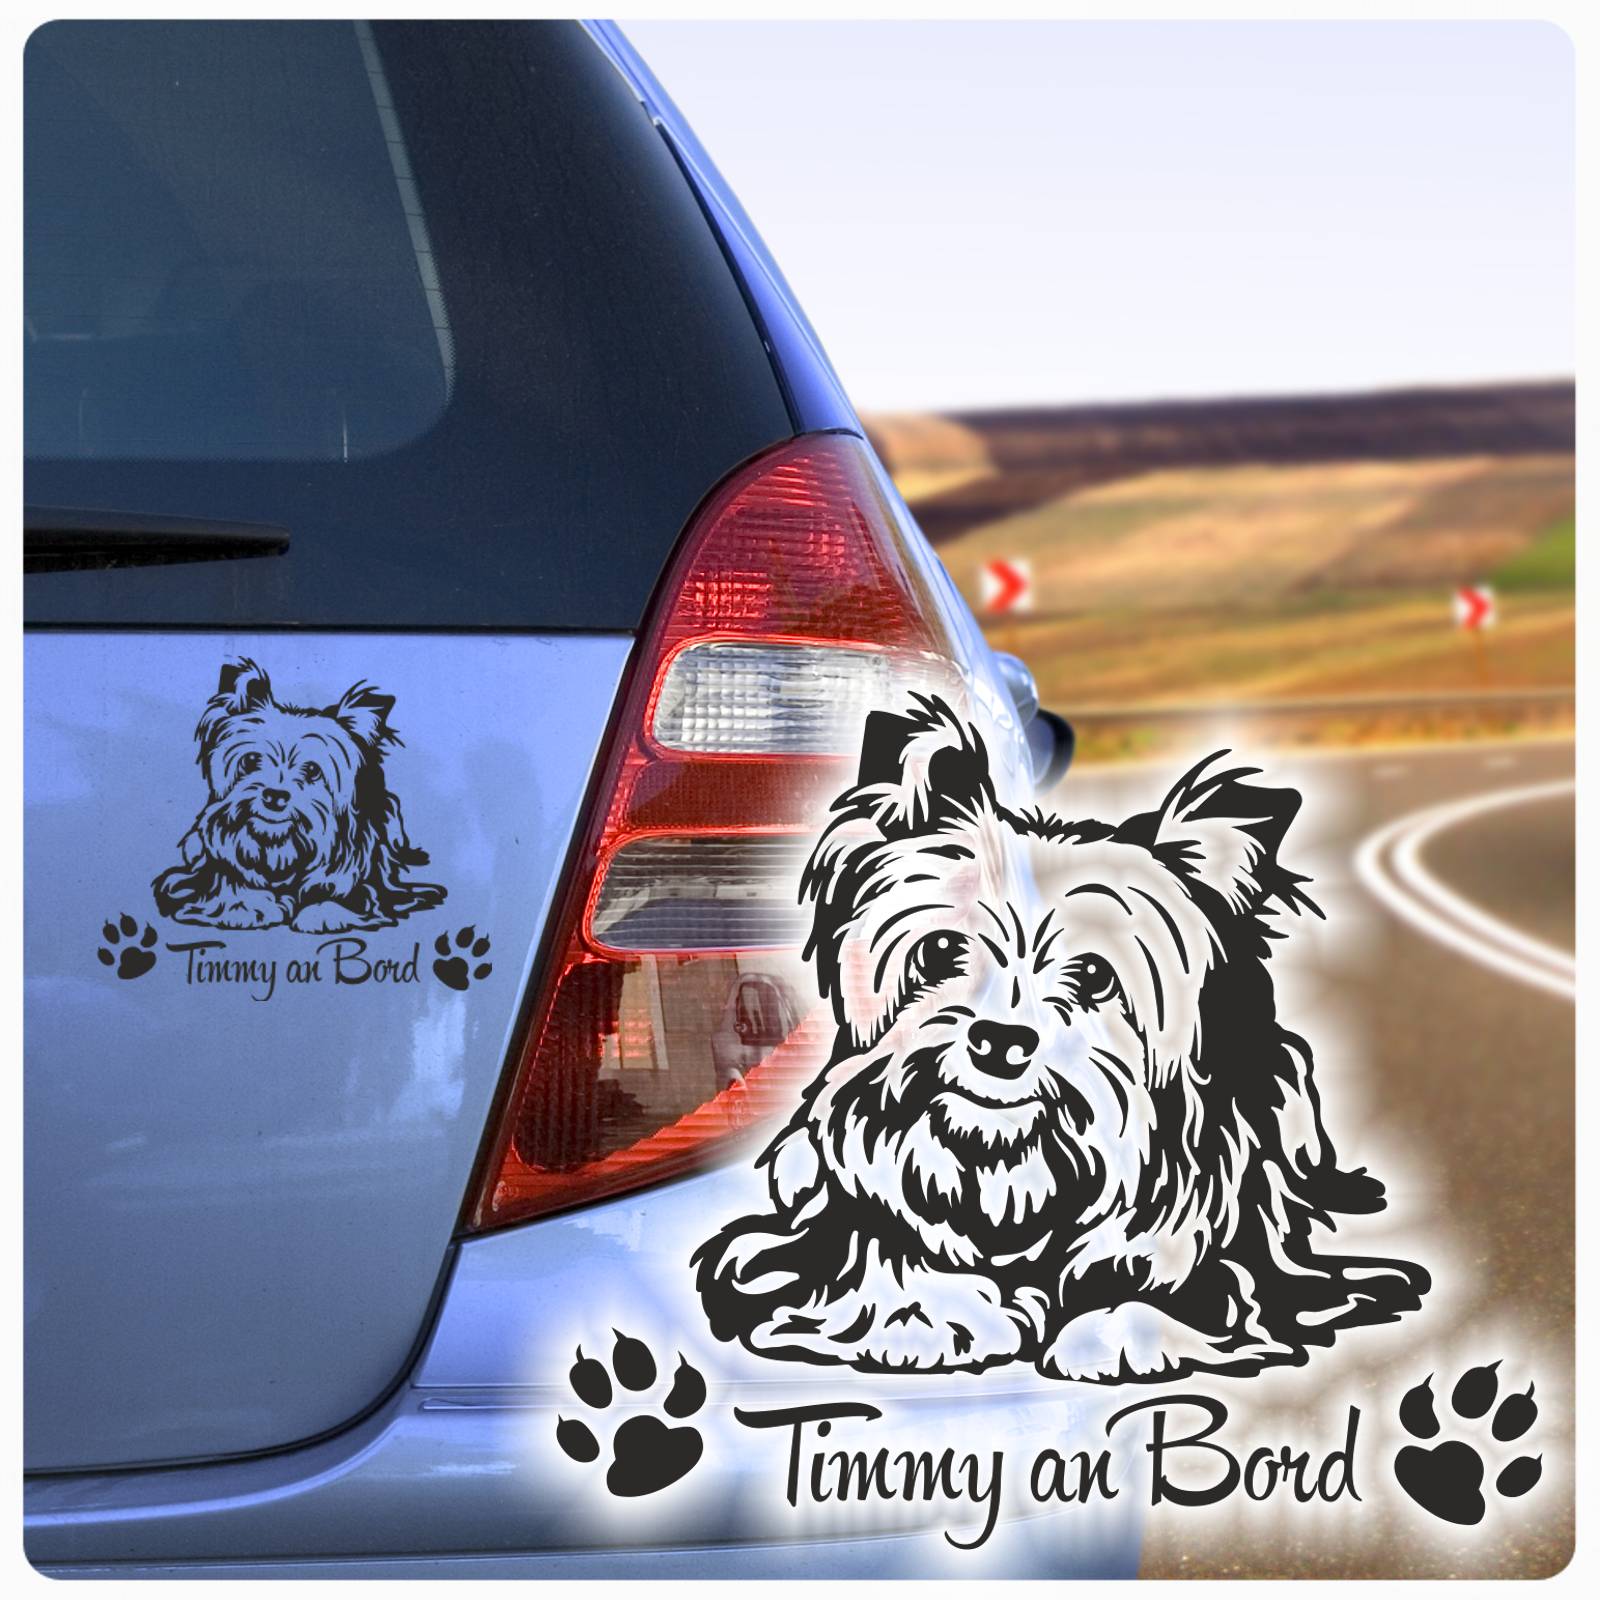 Auto Aufkleber Yorkshire Terrier Name an Bord Autoaufkleber Hund Pfoten